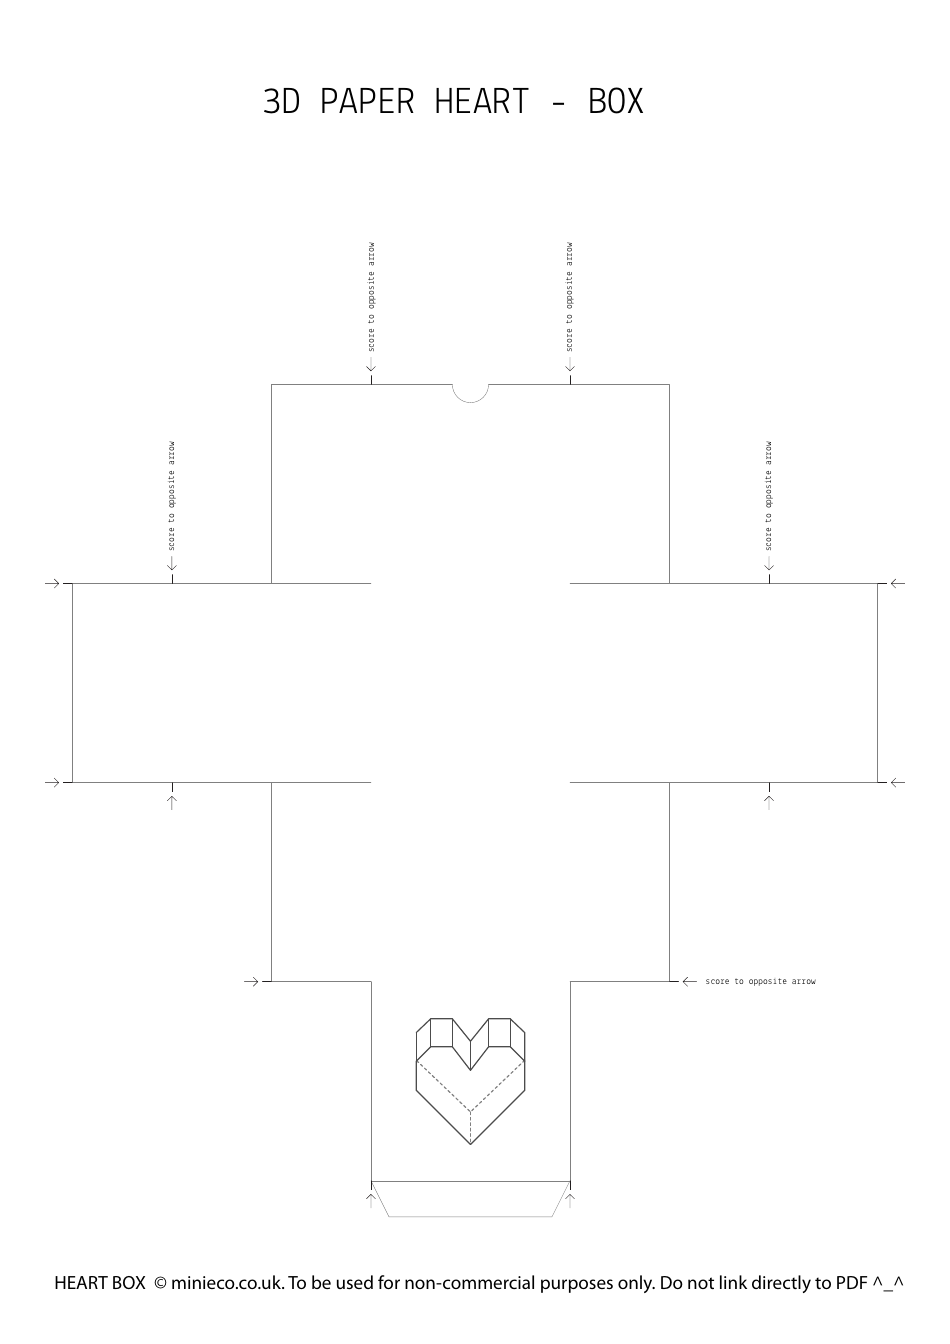 3D Paper Heart Box Template - Download Free Printable PDF